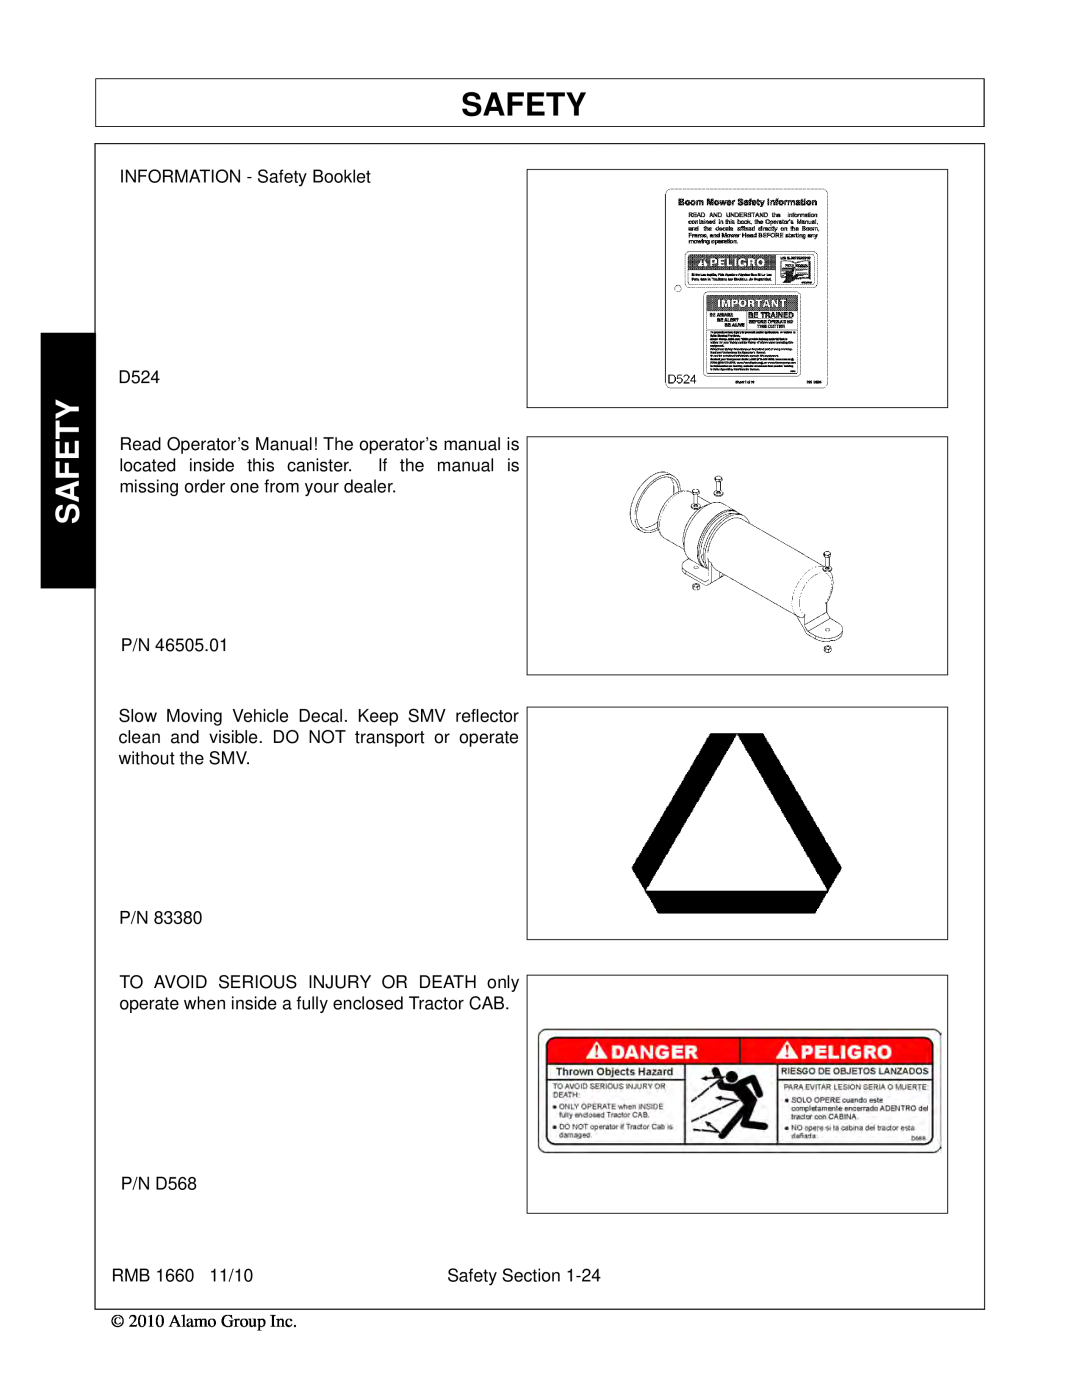 Bush Hog RMB 1660 manual Safety 